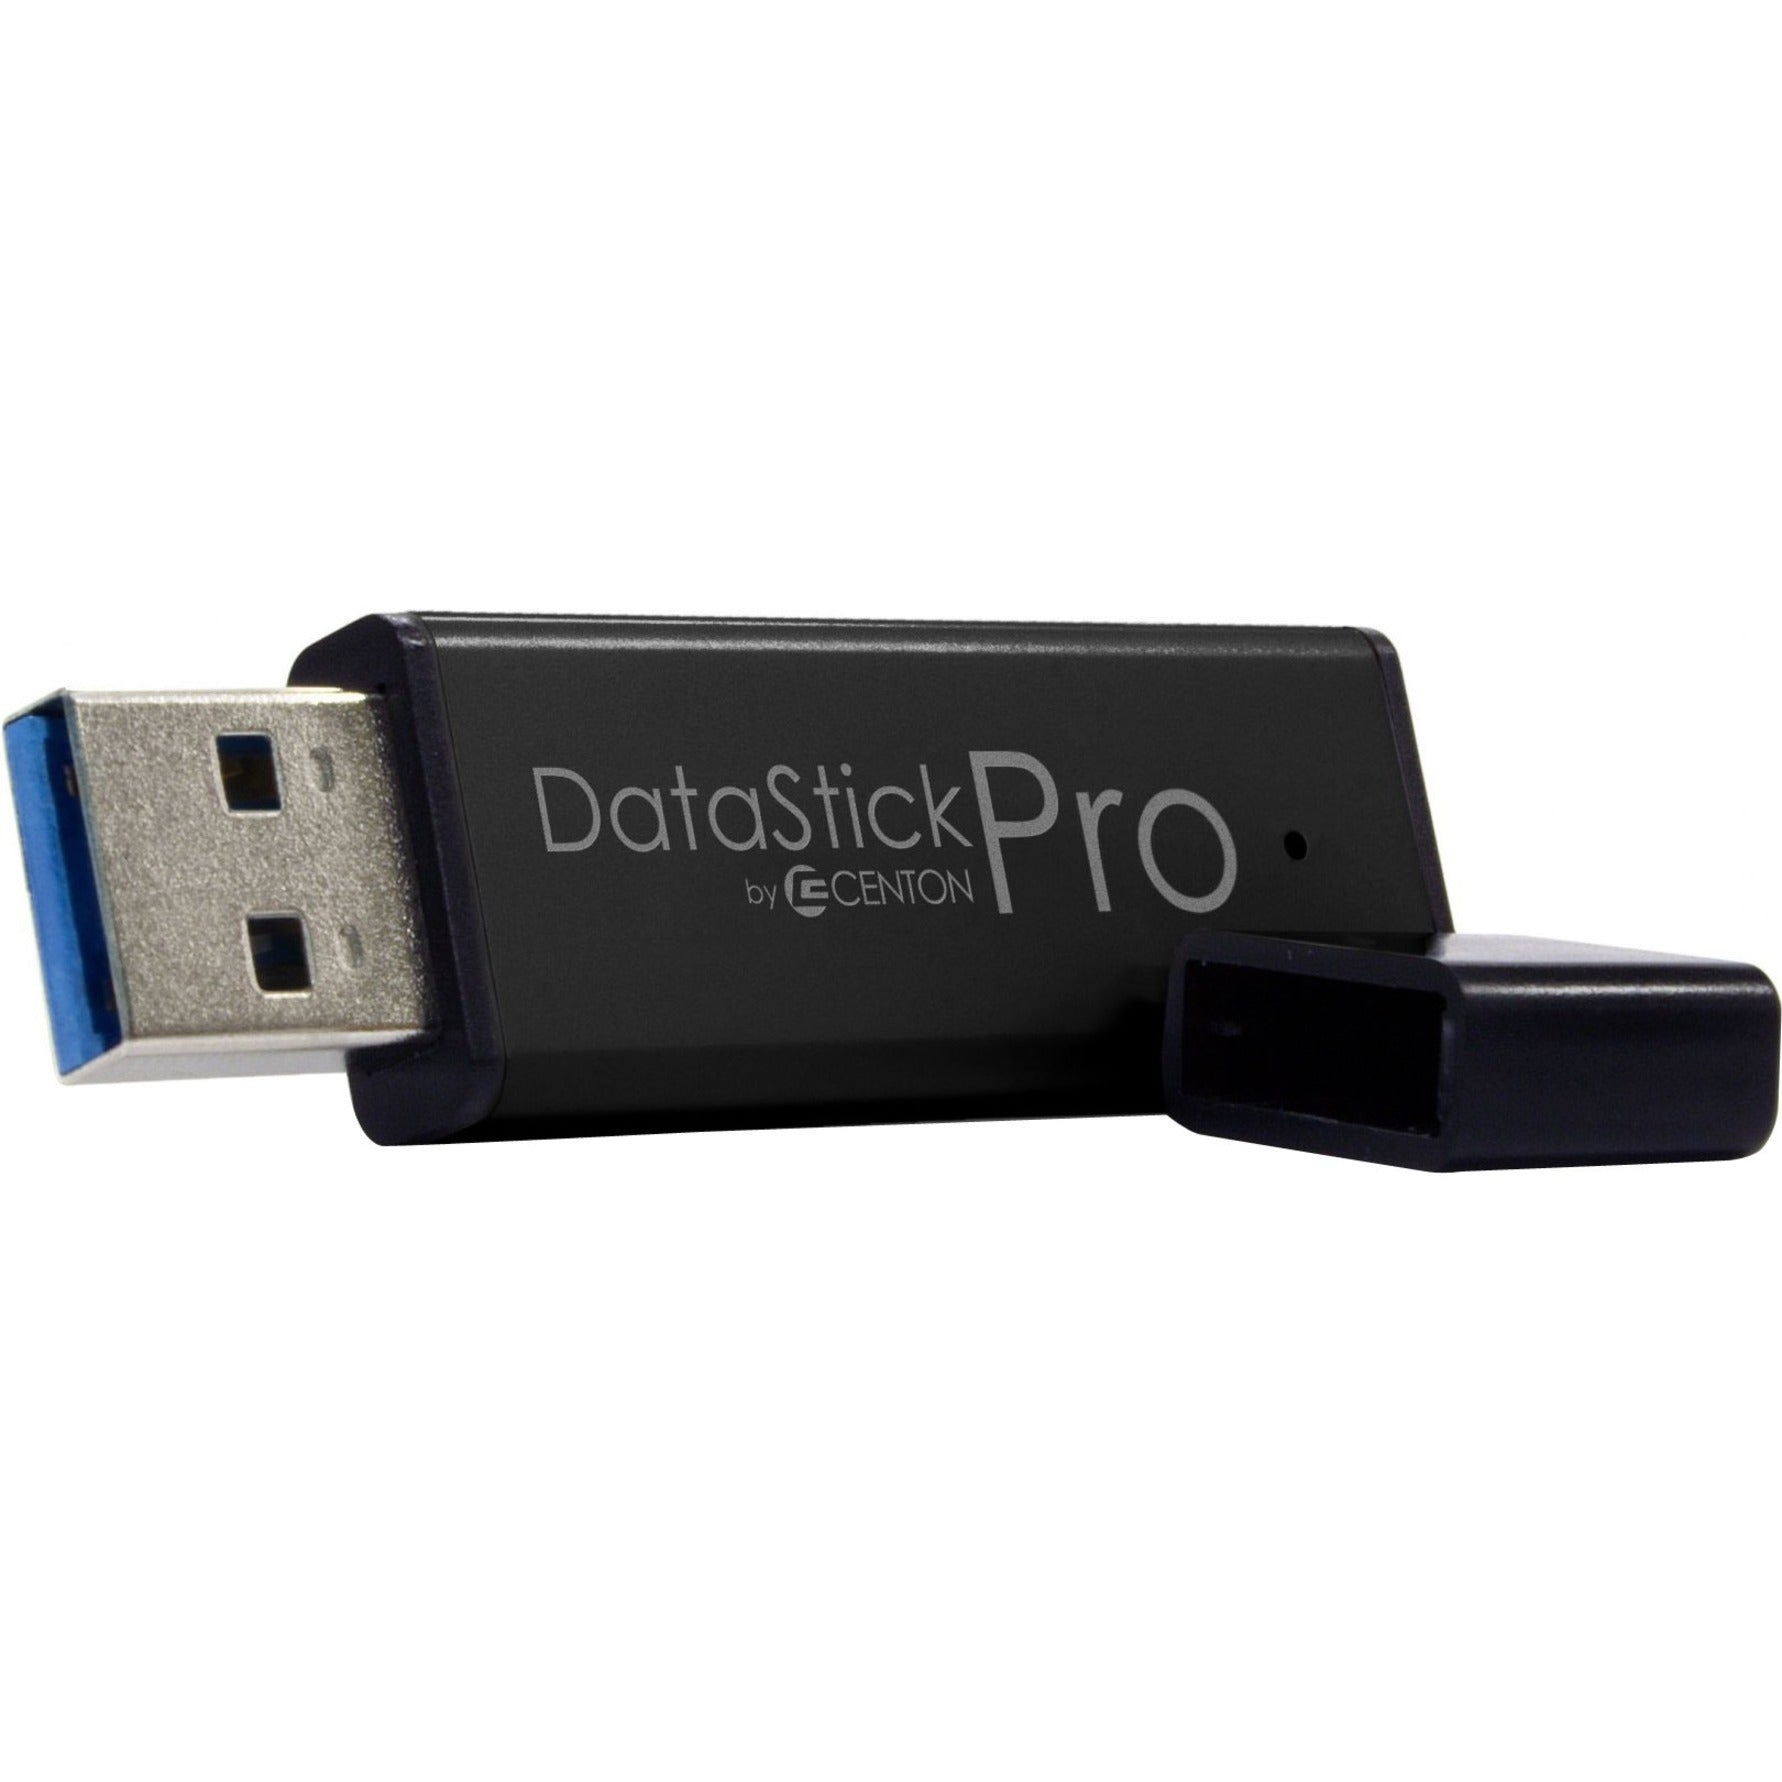 Centon S1-U3P6-256G MP Essential USB 3.0 Datastick Pro (Black) 256GB, High-Speed Storage Solution